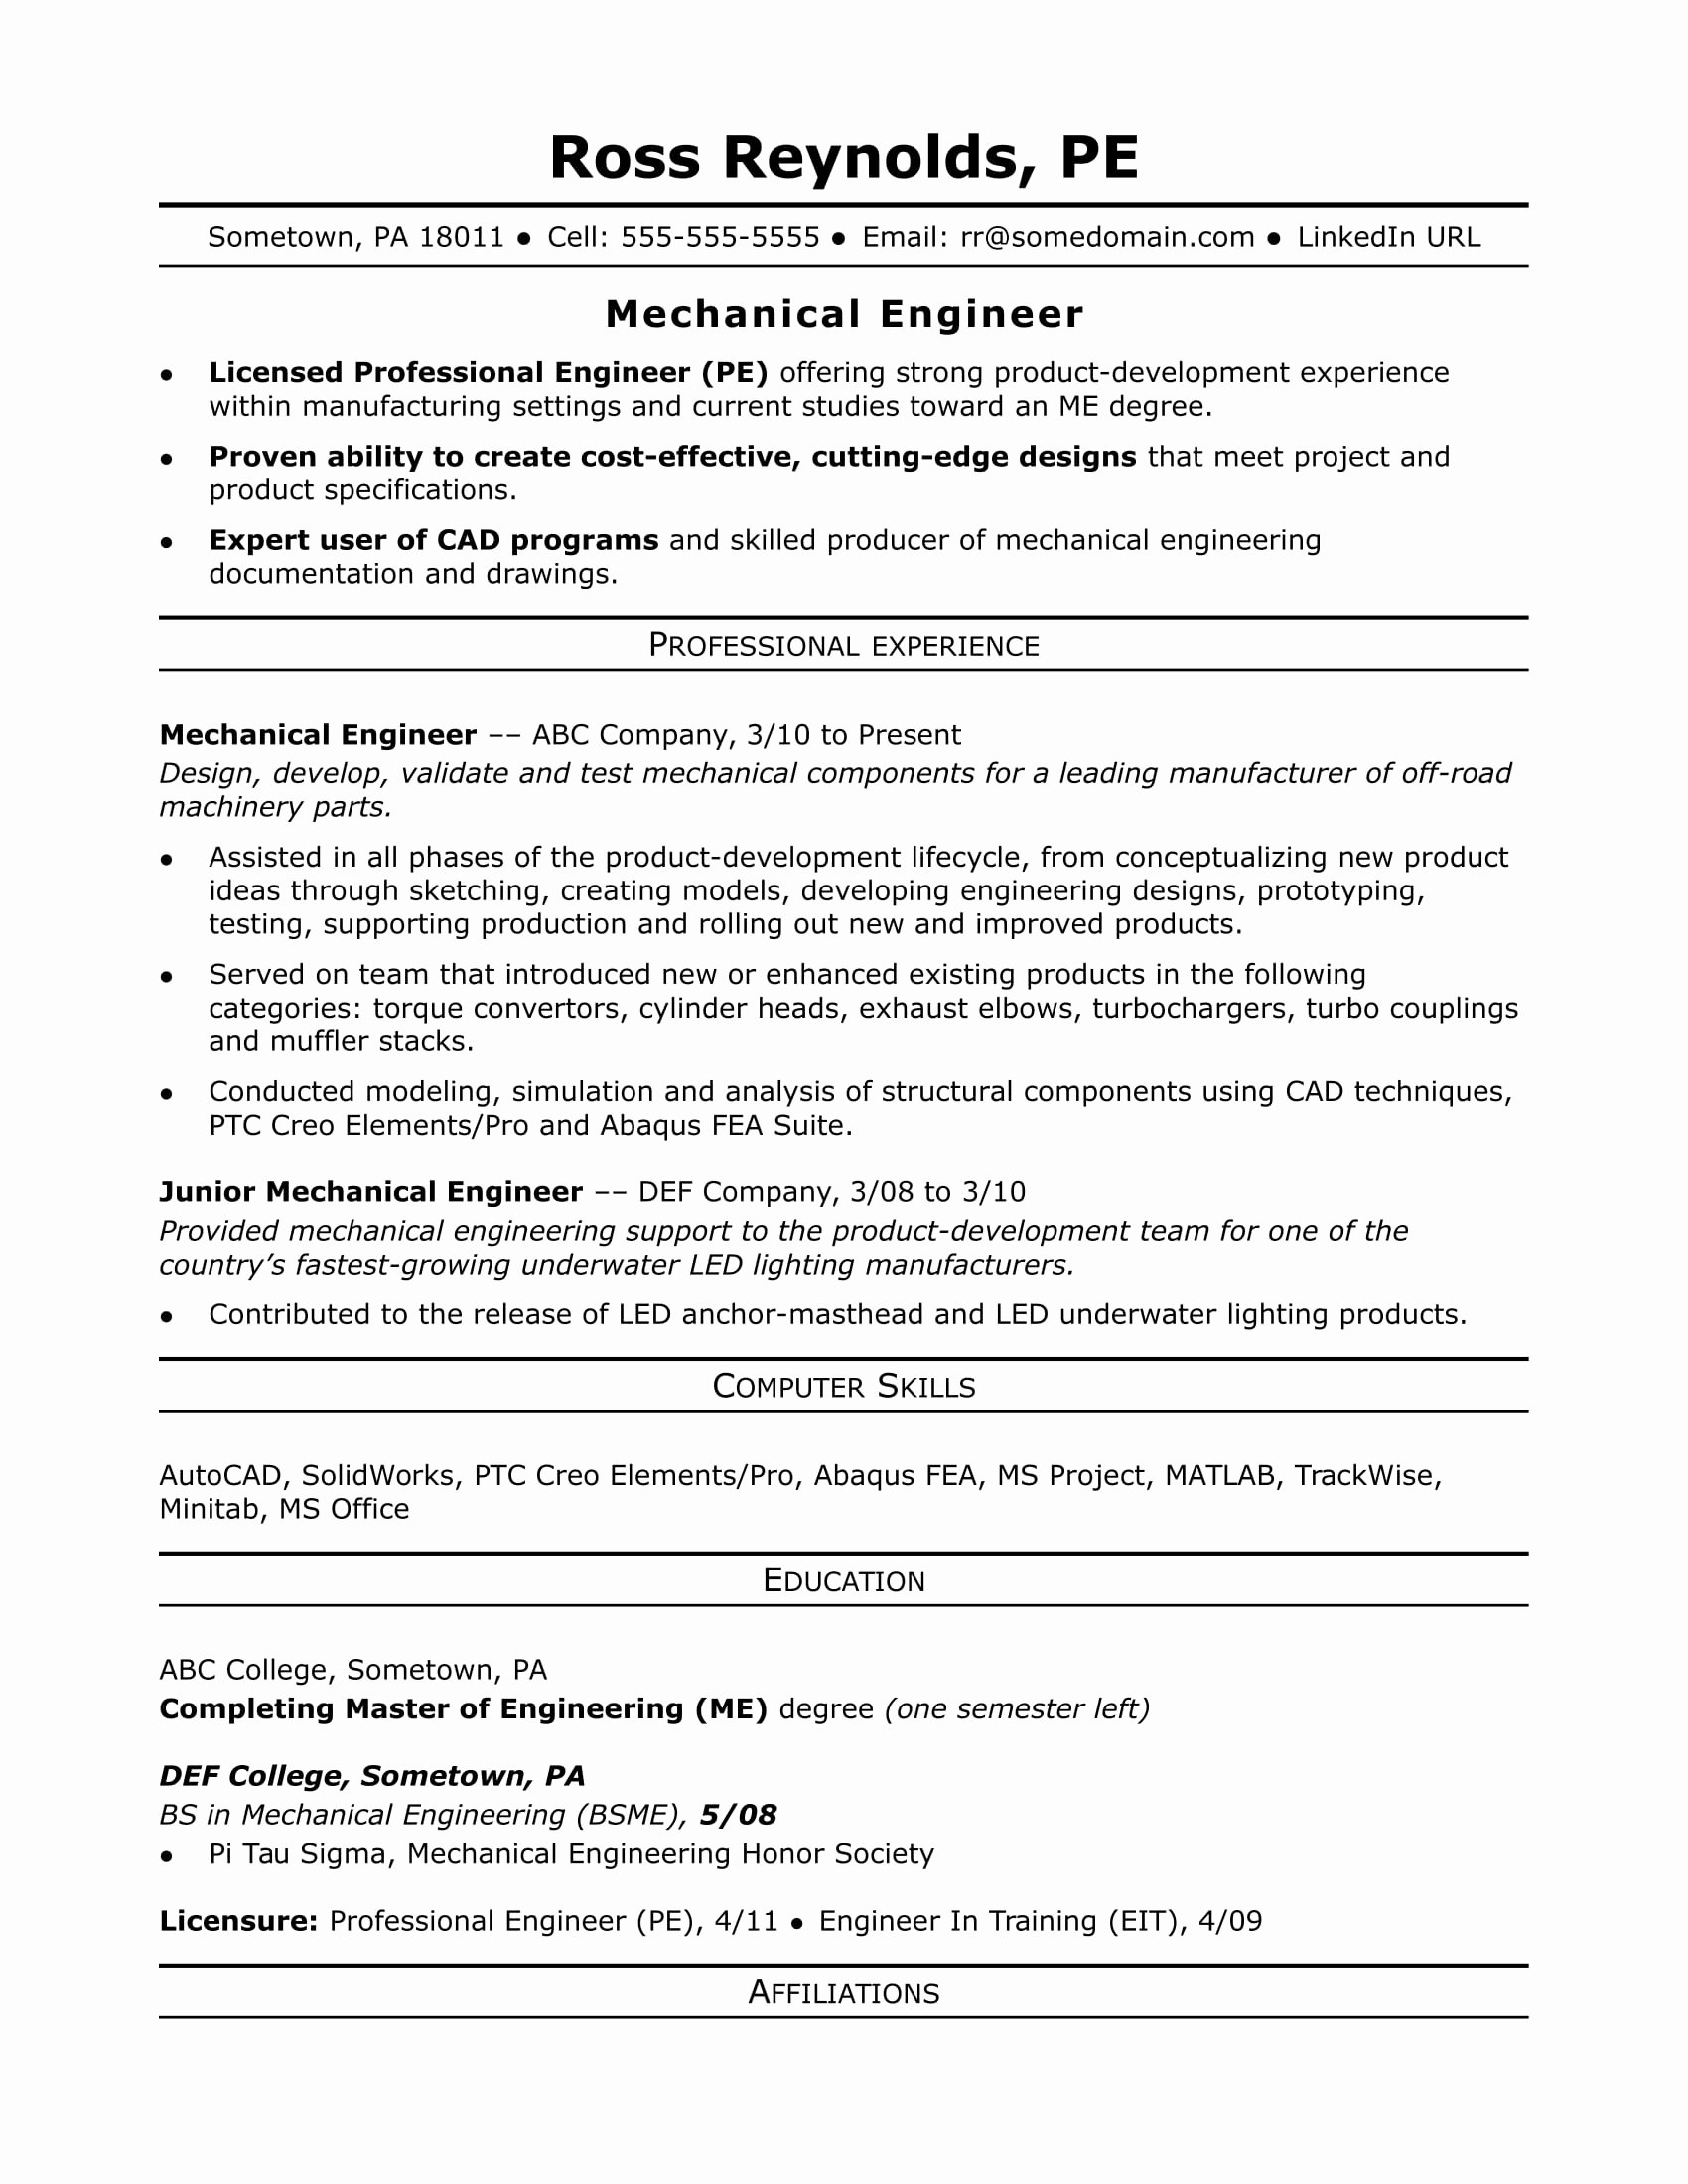 Sample Resume for A Midlevel Mechanical Engineer